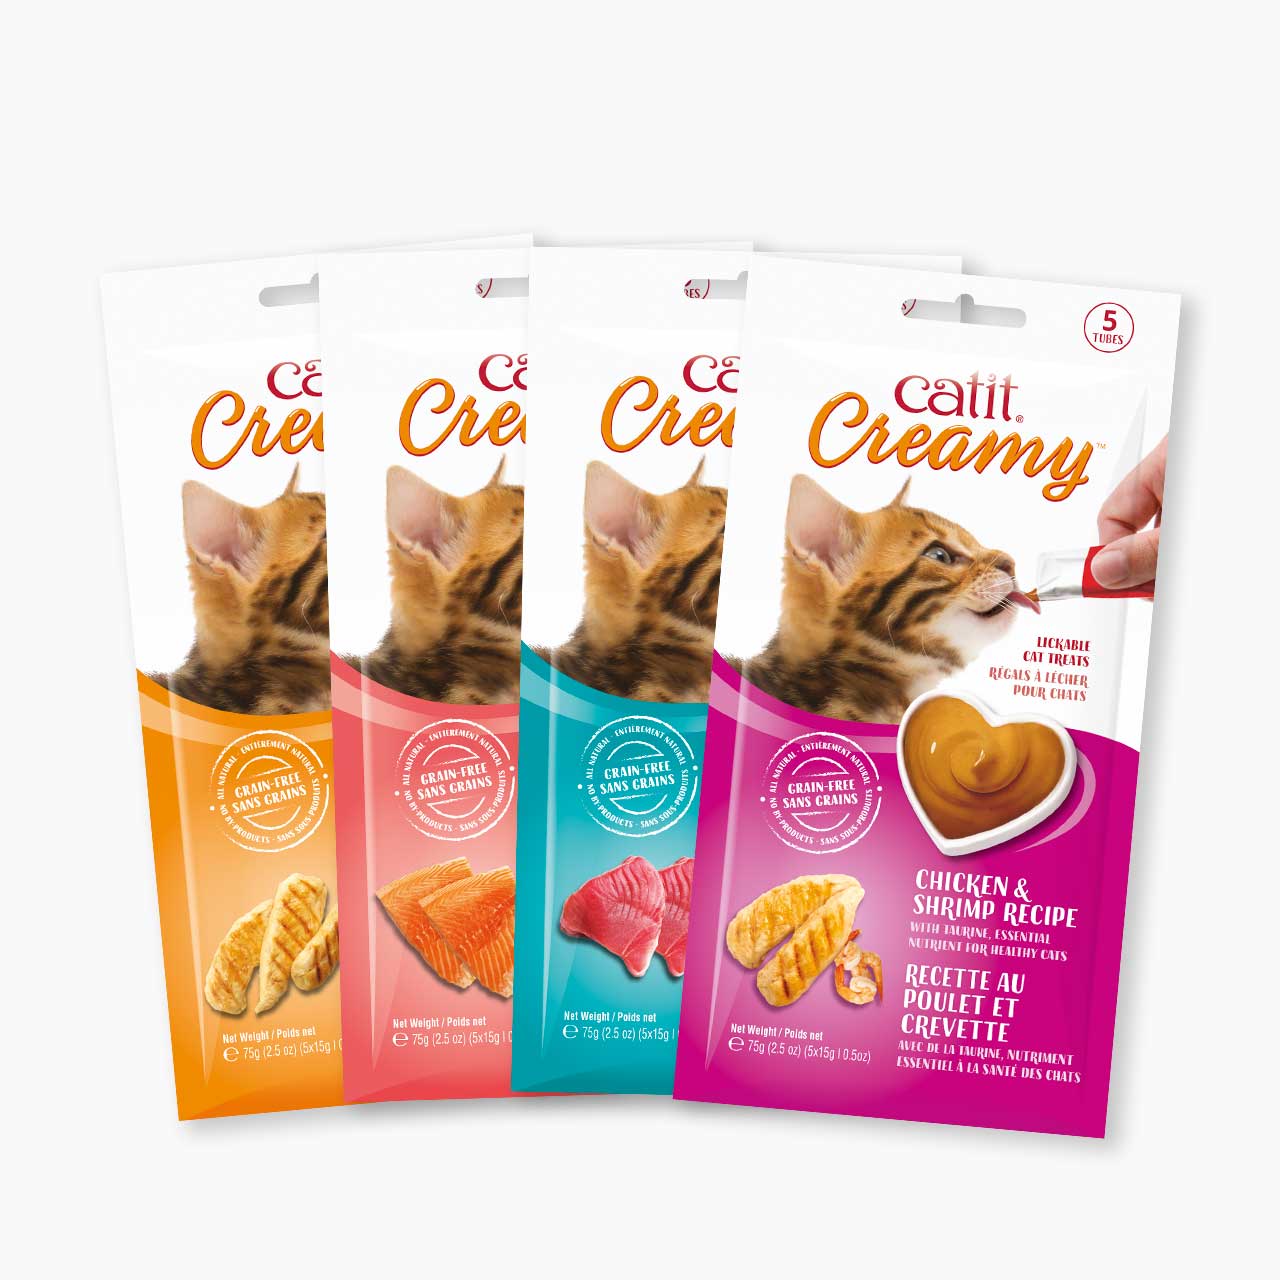 Catit Creamy – 5 Pack